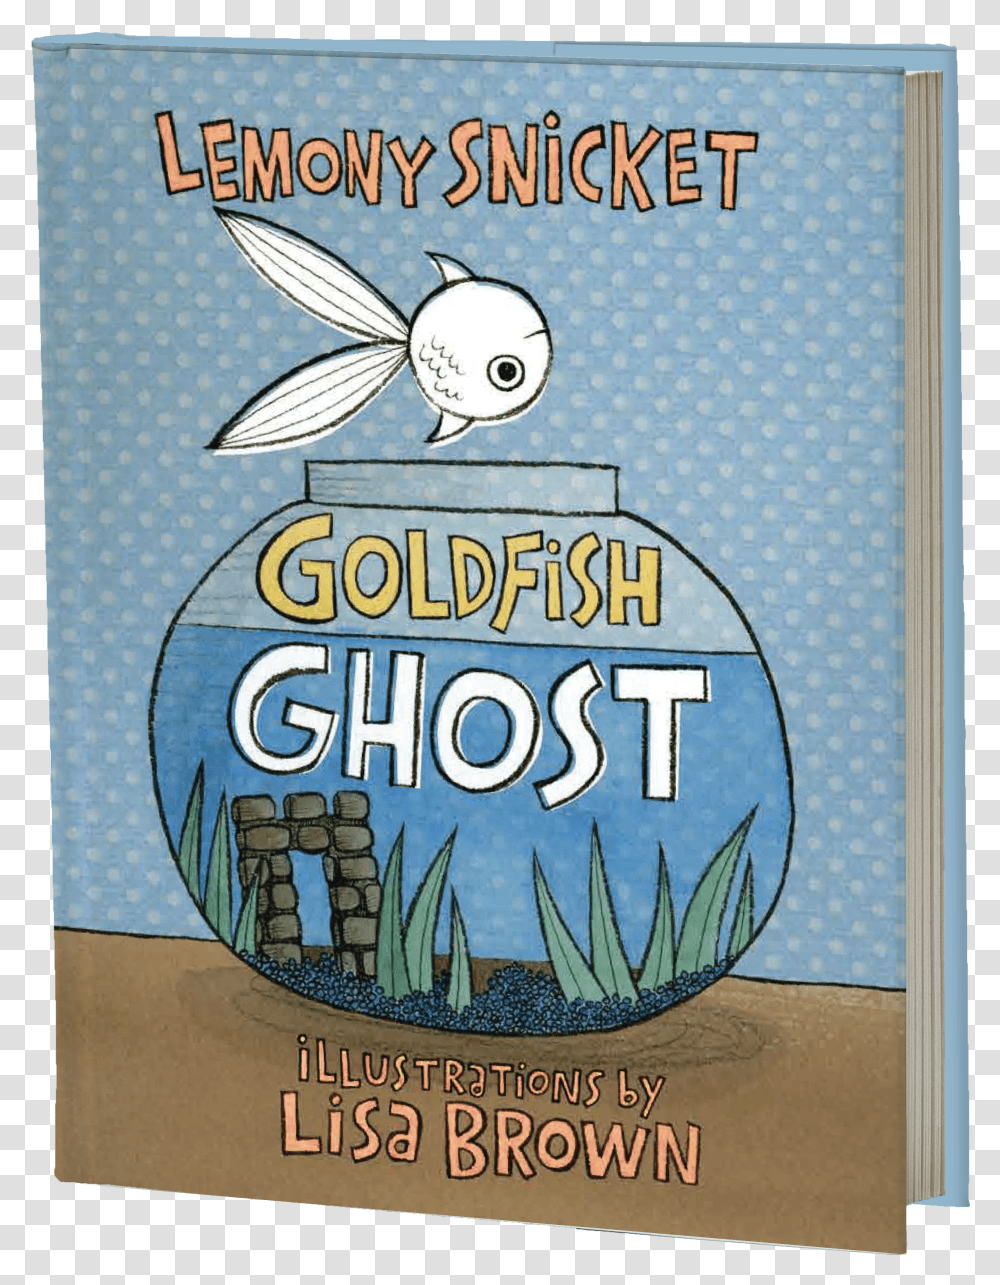 Goldfish Ghost 3d Book Transparent Png